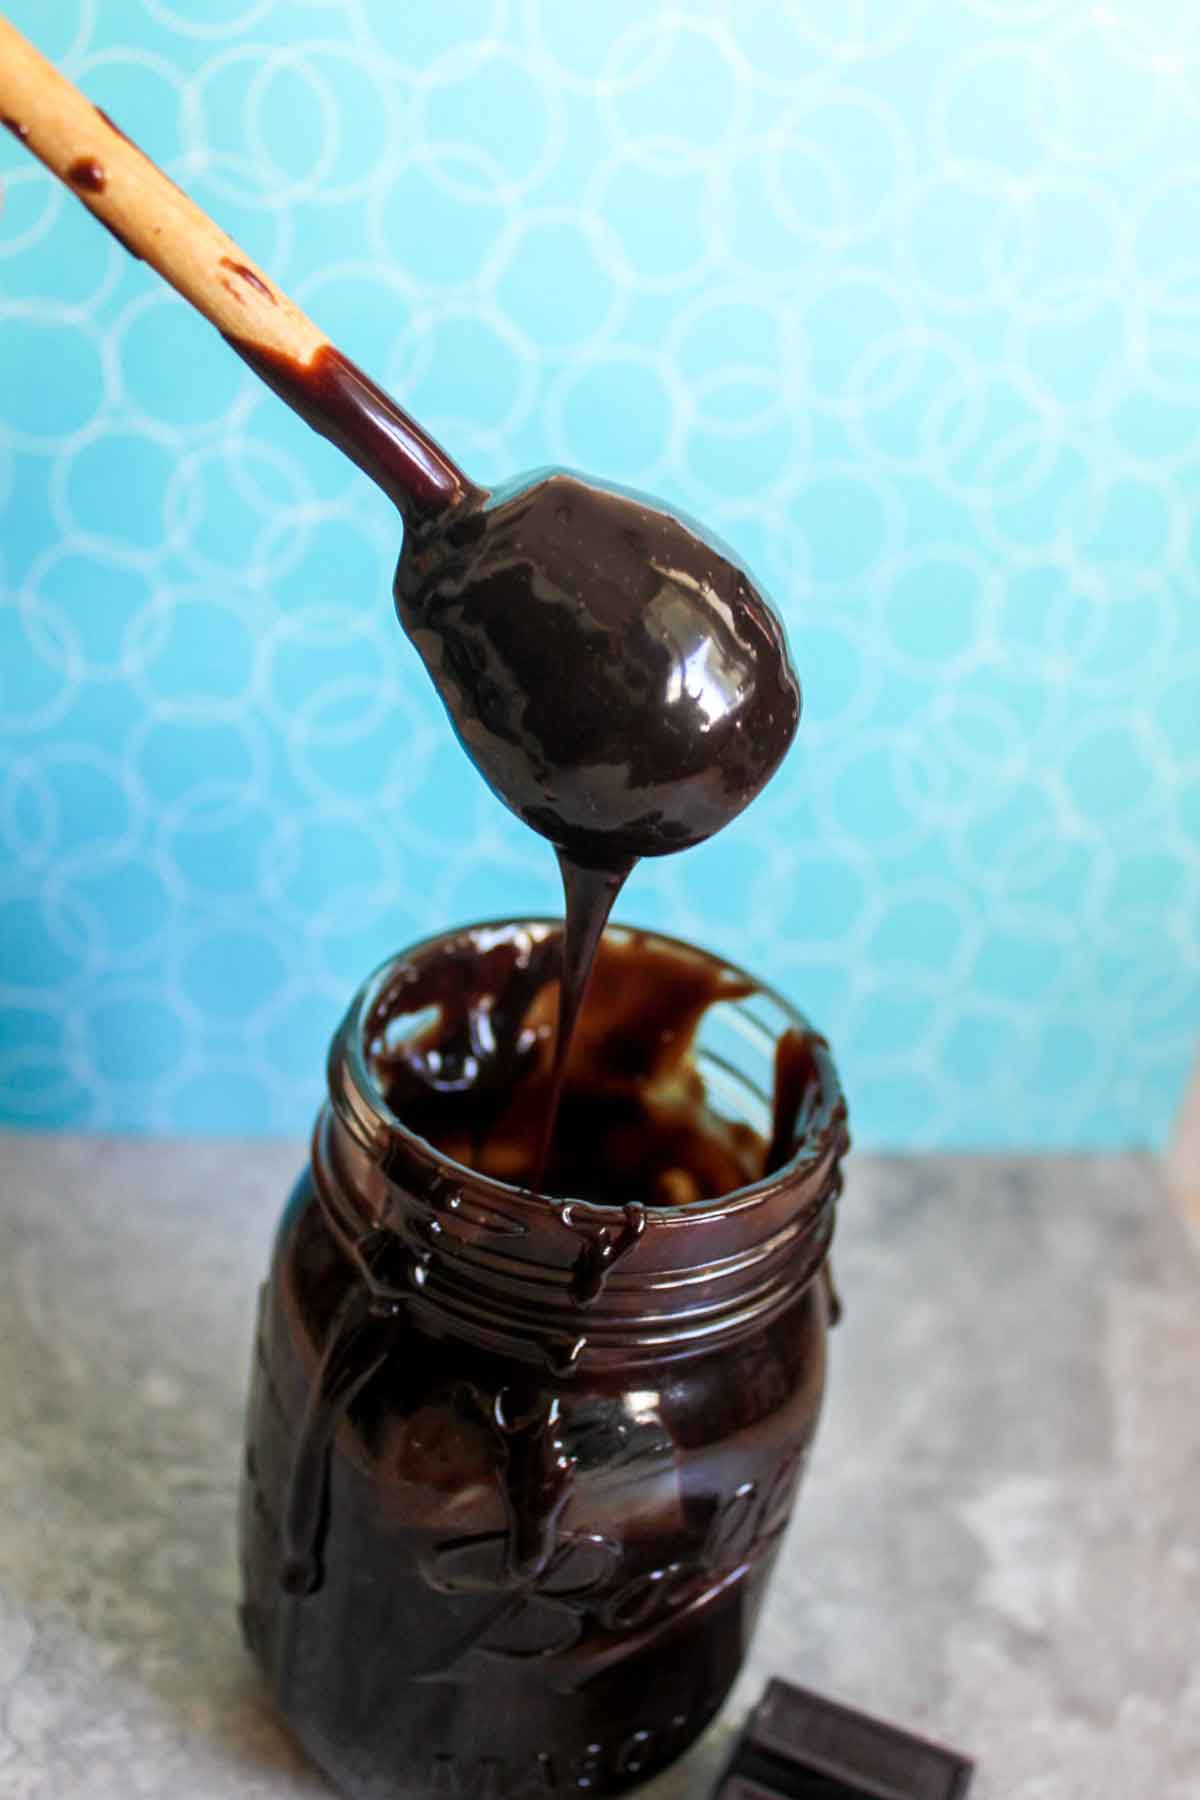 Dark Chocolate Salted Caramel Sauce